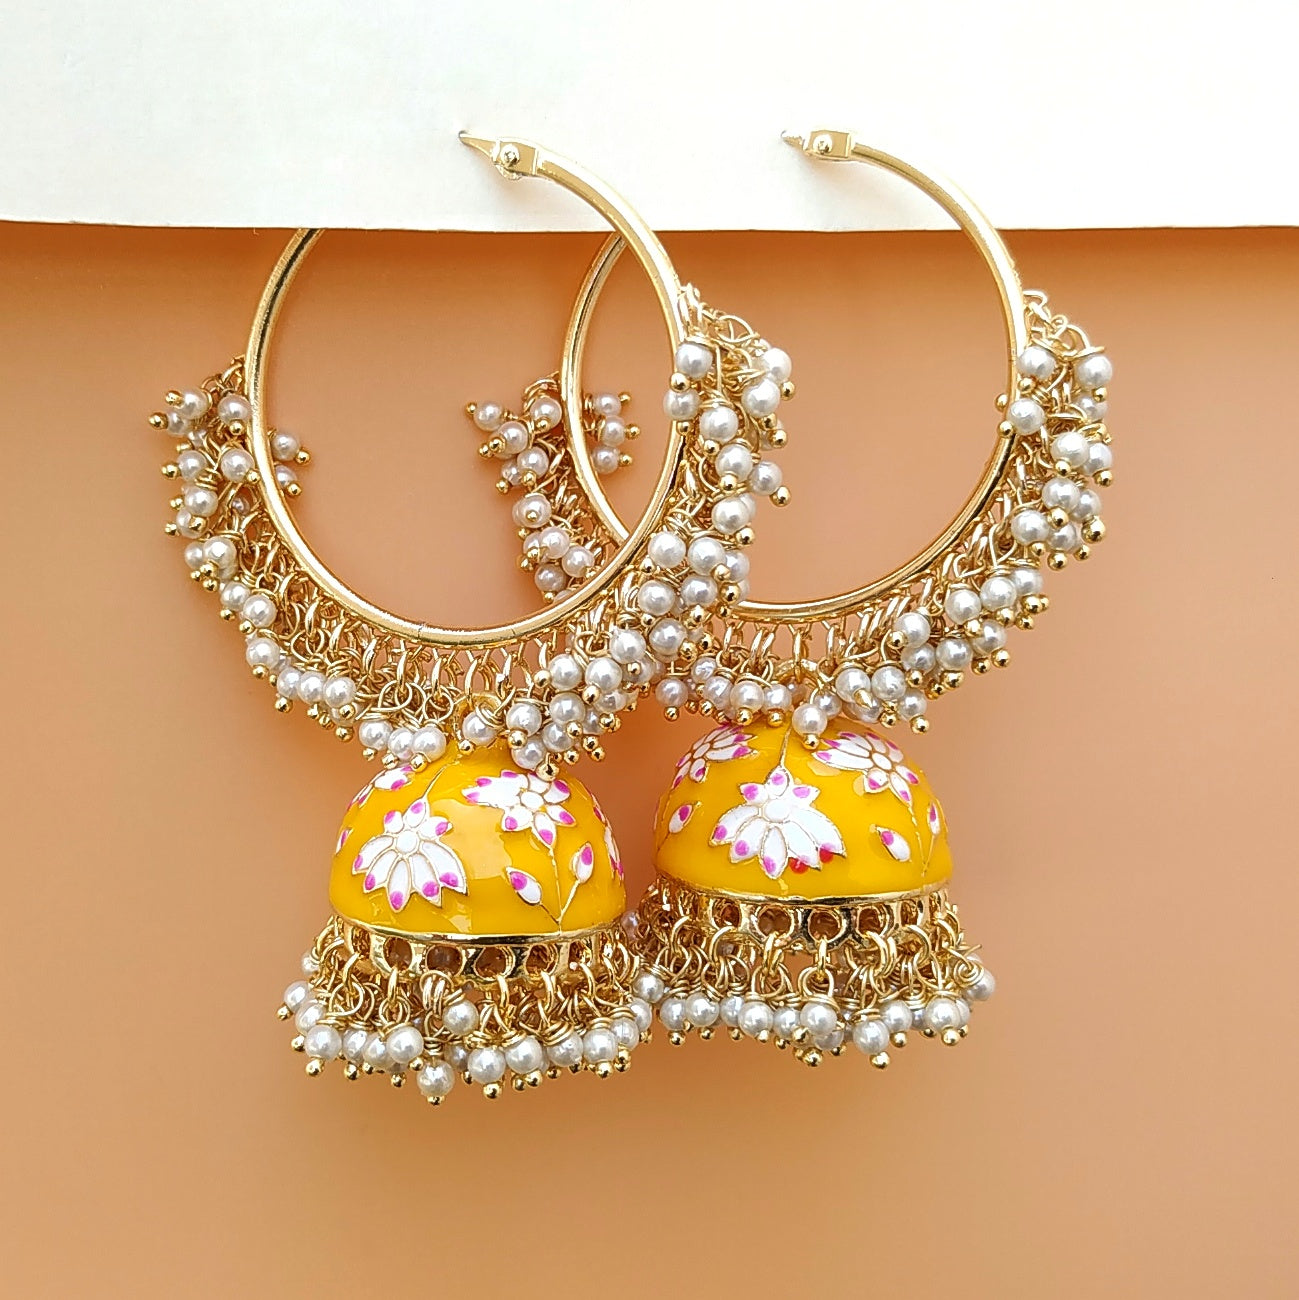 Buy Silver-Toned Earrings for Women by Crunchy Fashion Online | Ajio.com